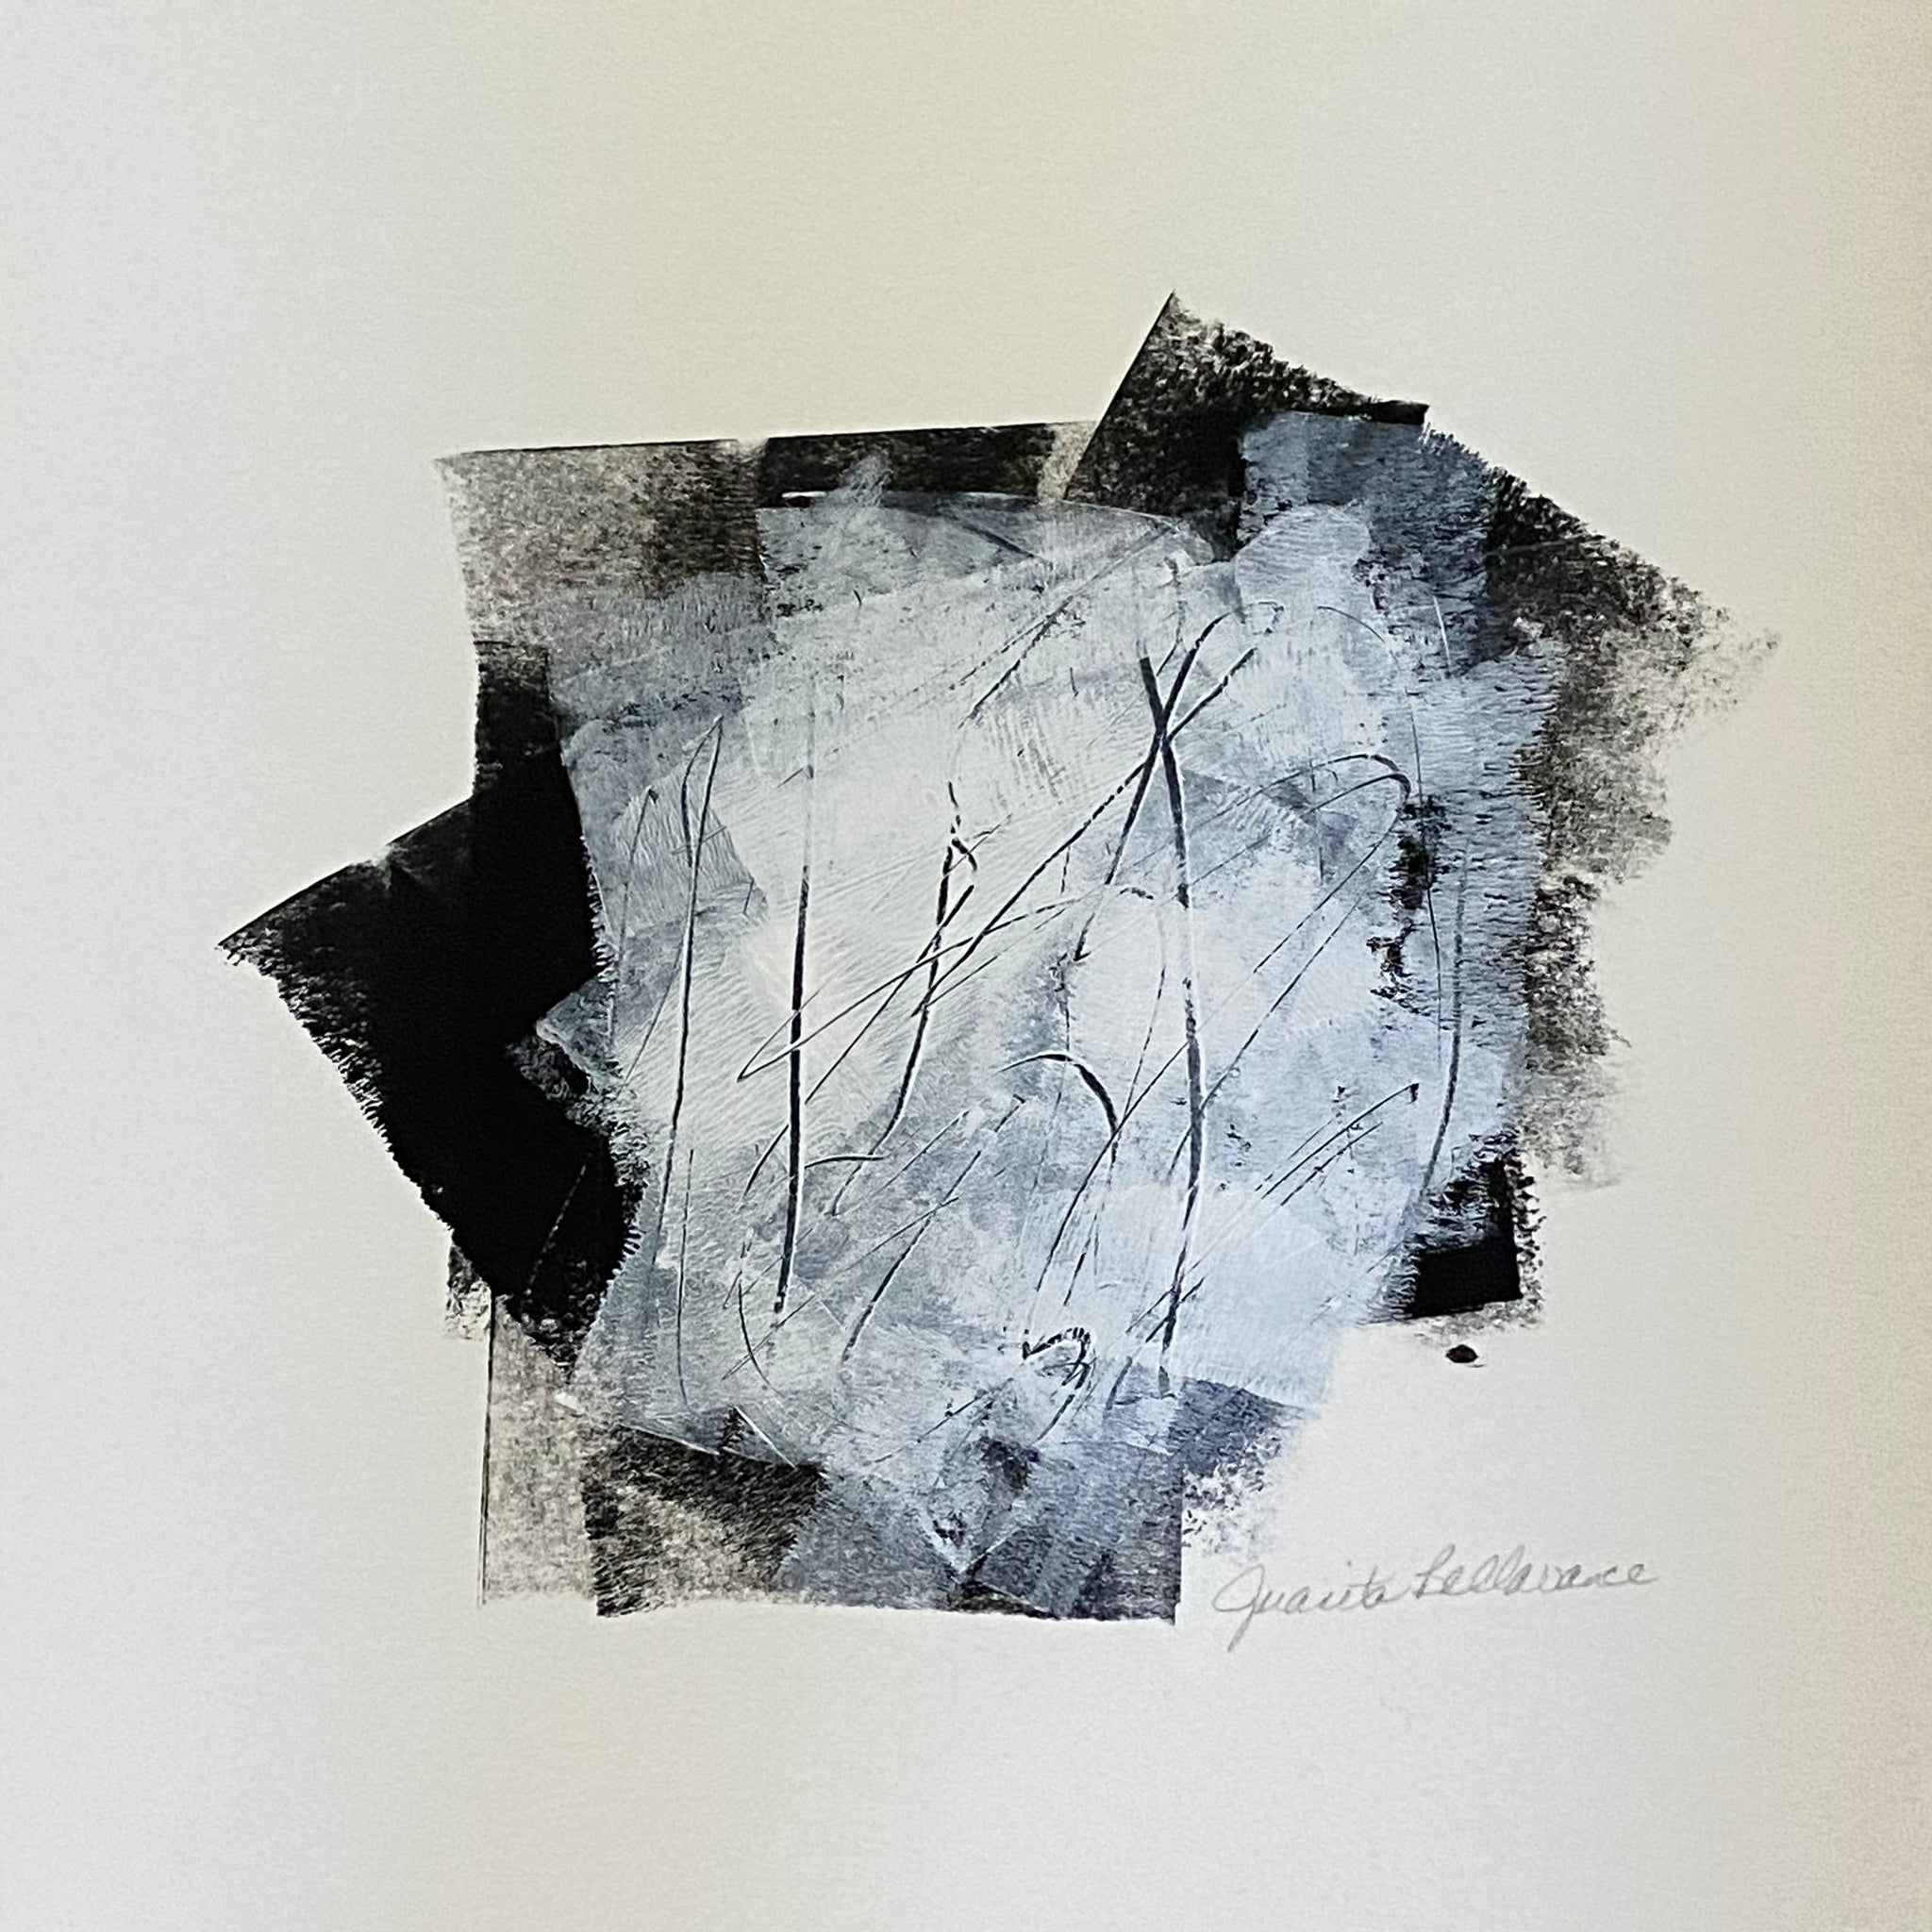 Juanita Bellavance, Distinctive 1, 2019, Acrylic on paper, 10 x 10 inches Unframed